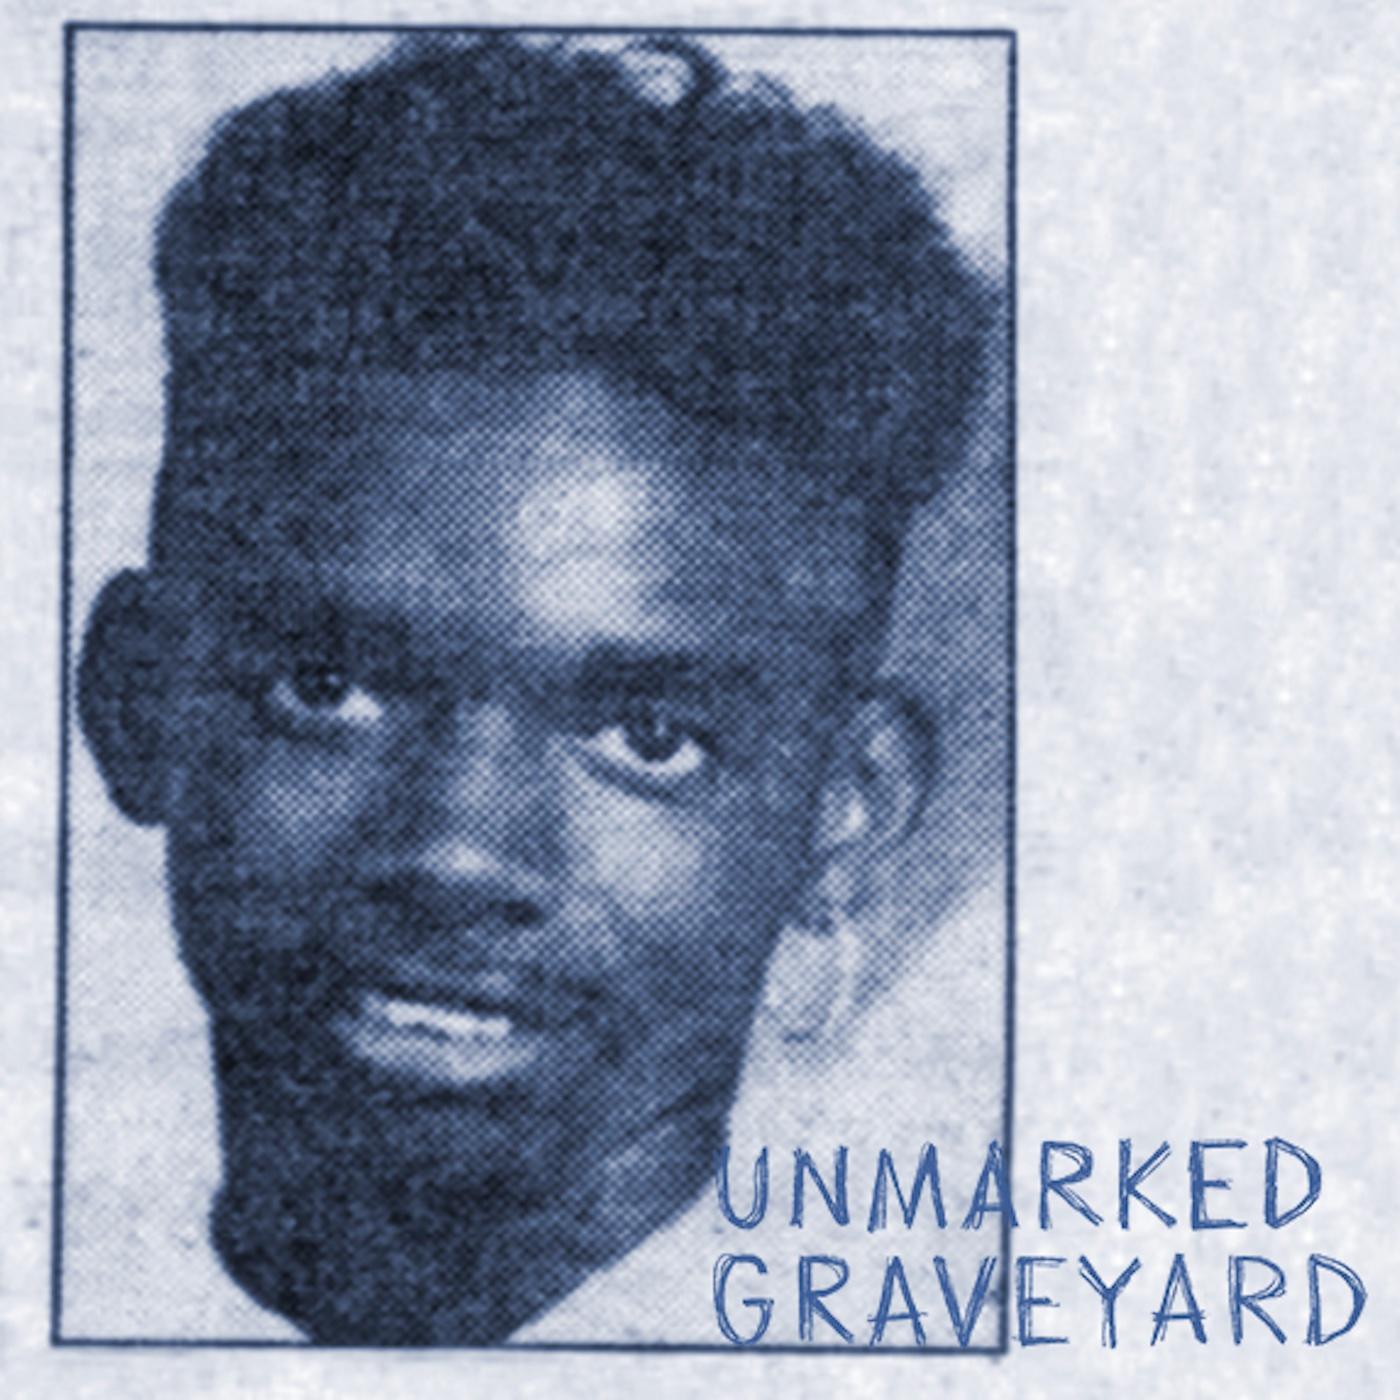 Thumbnail for "The Unmarked Graveyard: LaMont Dottin".